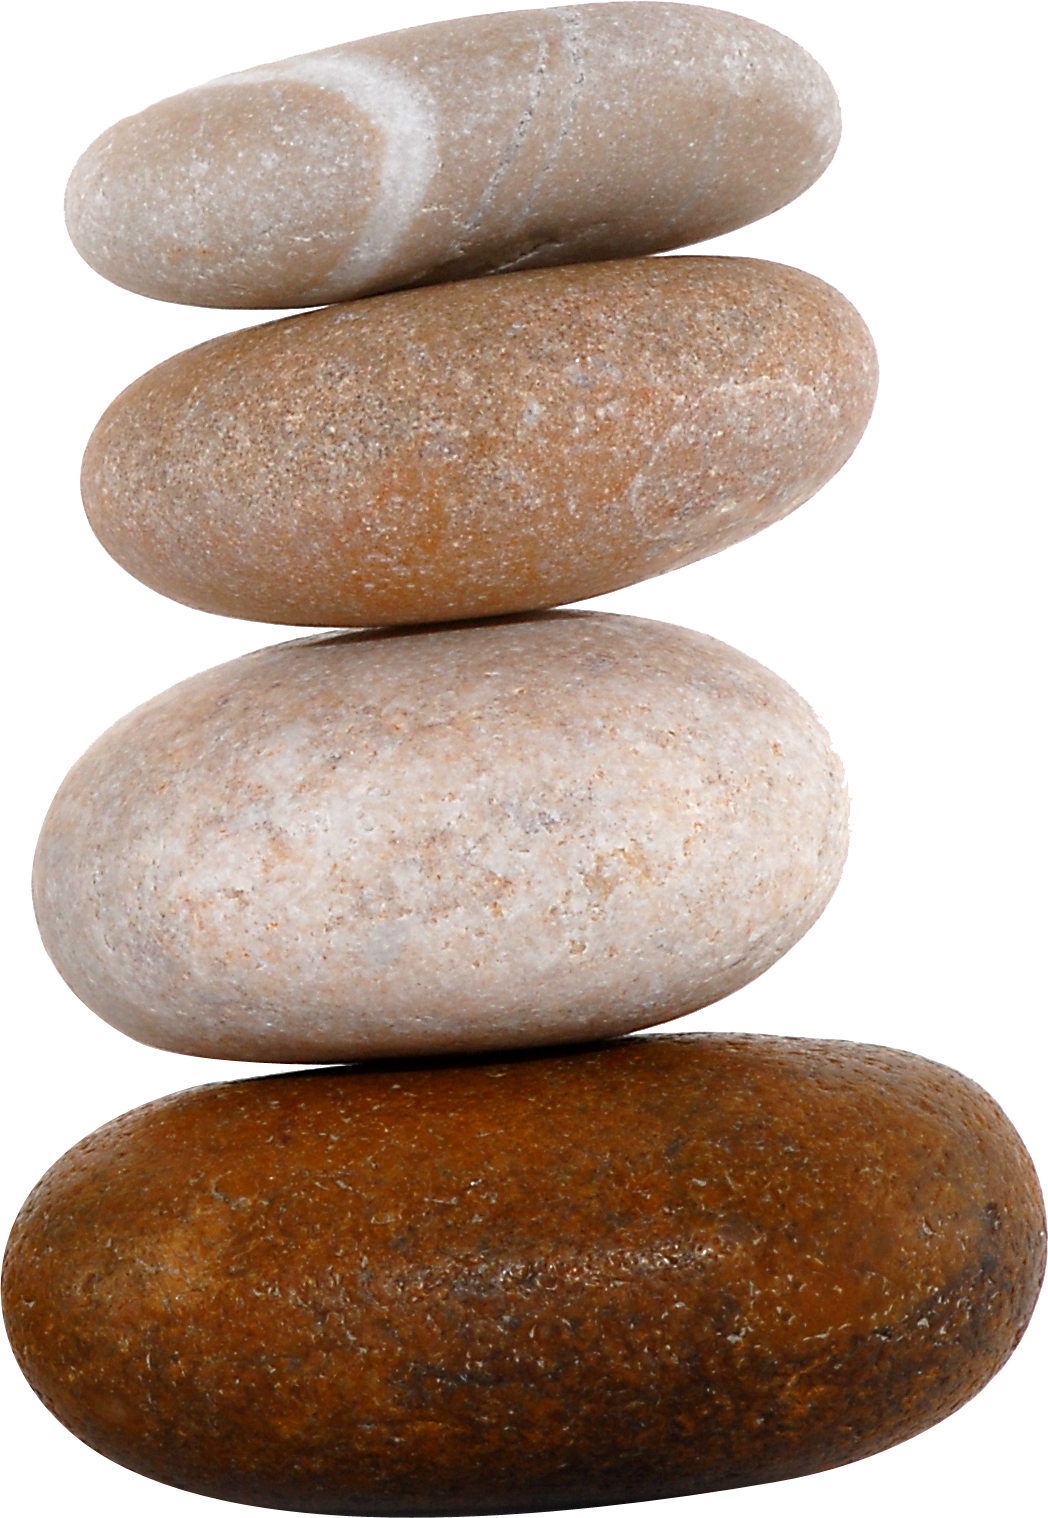 Stones And Rocks